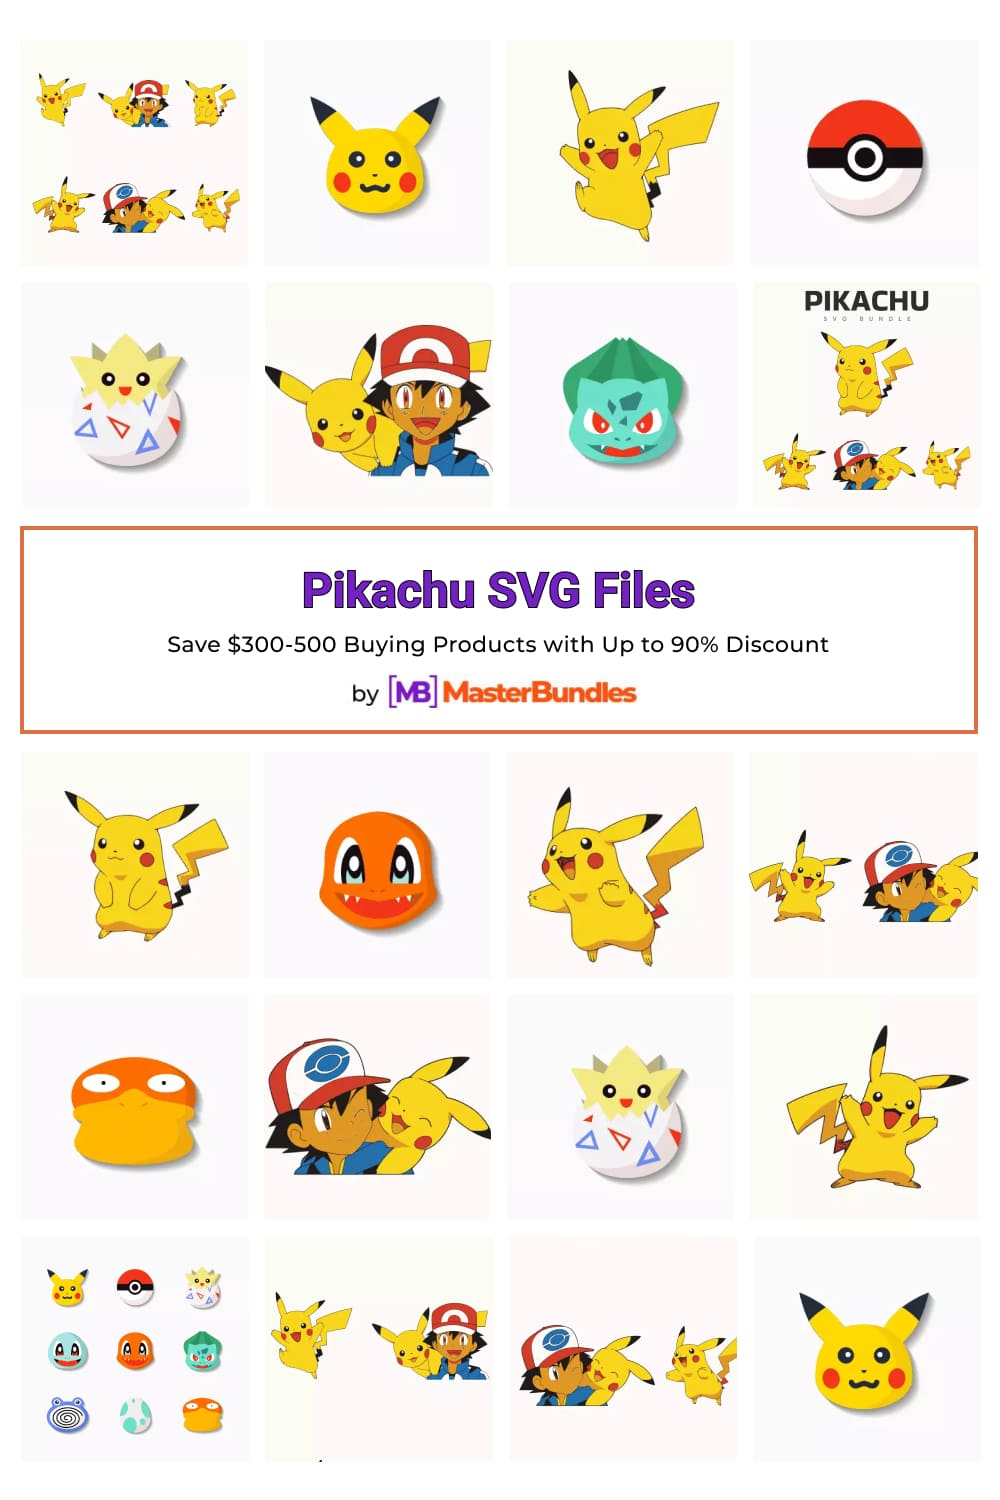 Pikachu SVG Files Pinterest image.